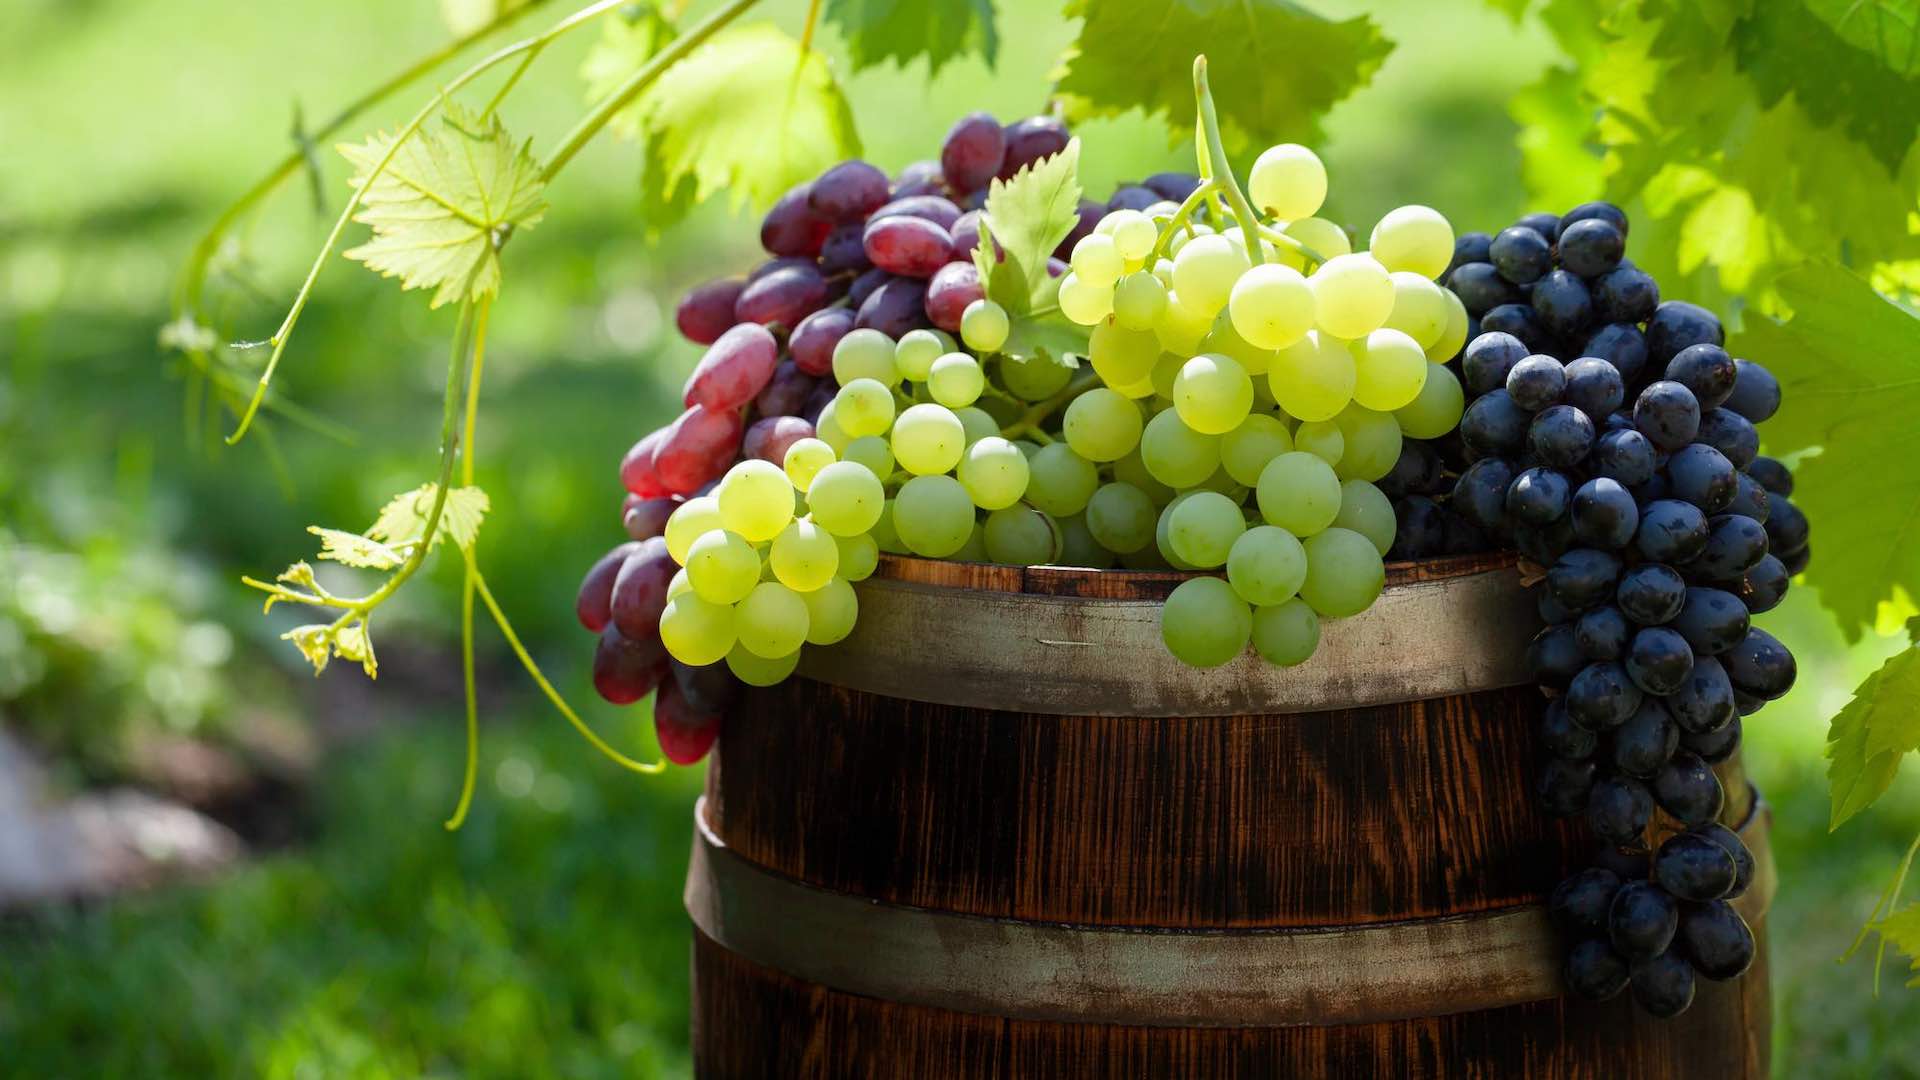 Grapes enhance eye health, surpassing their known antioxidant benefits